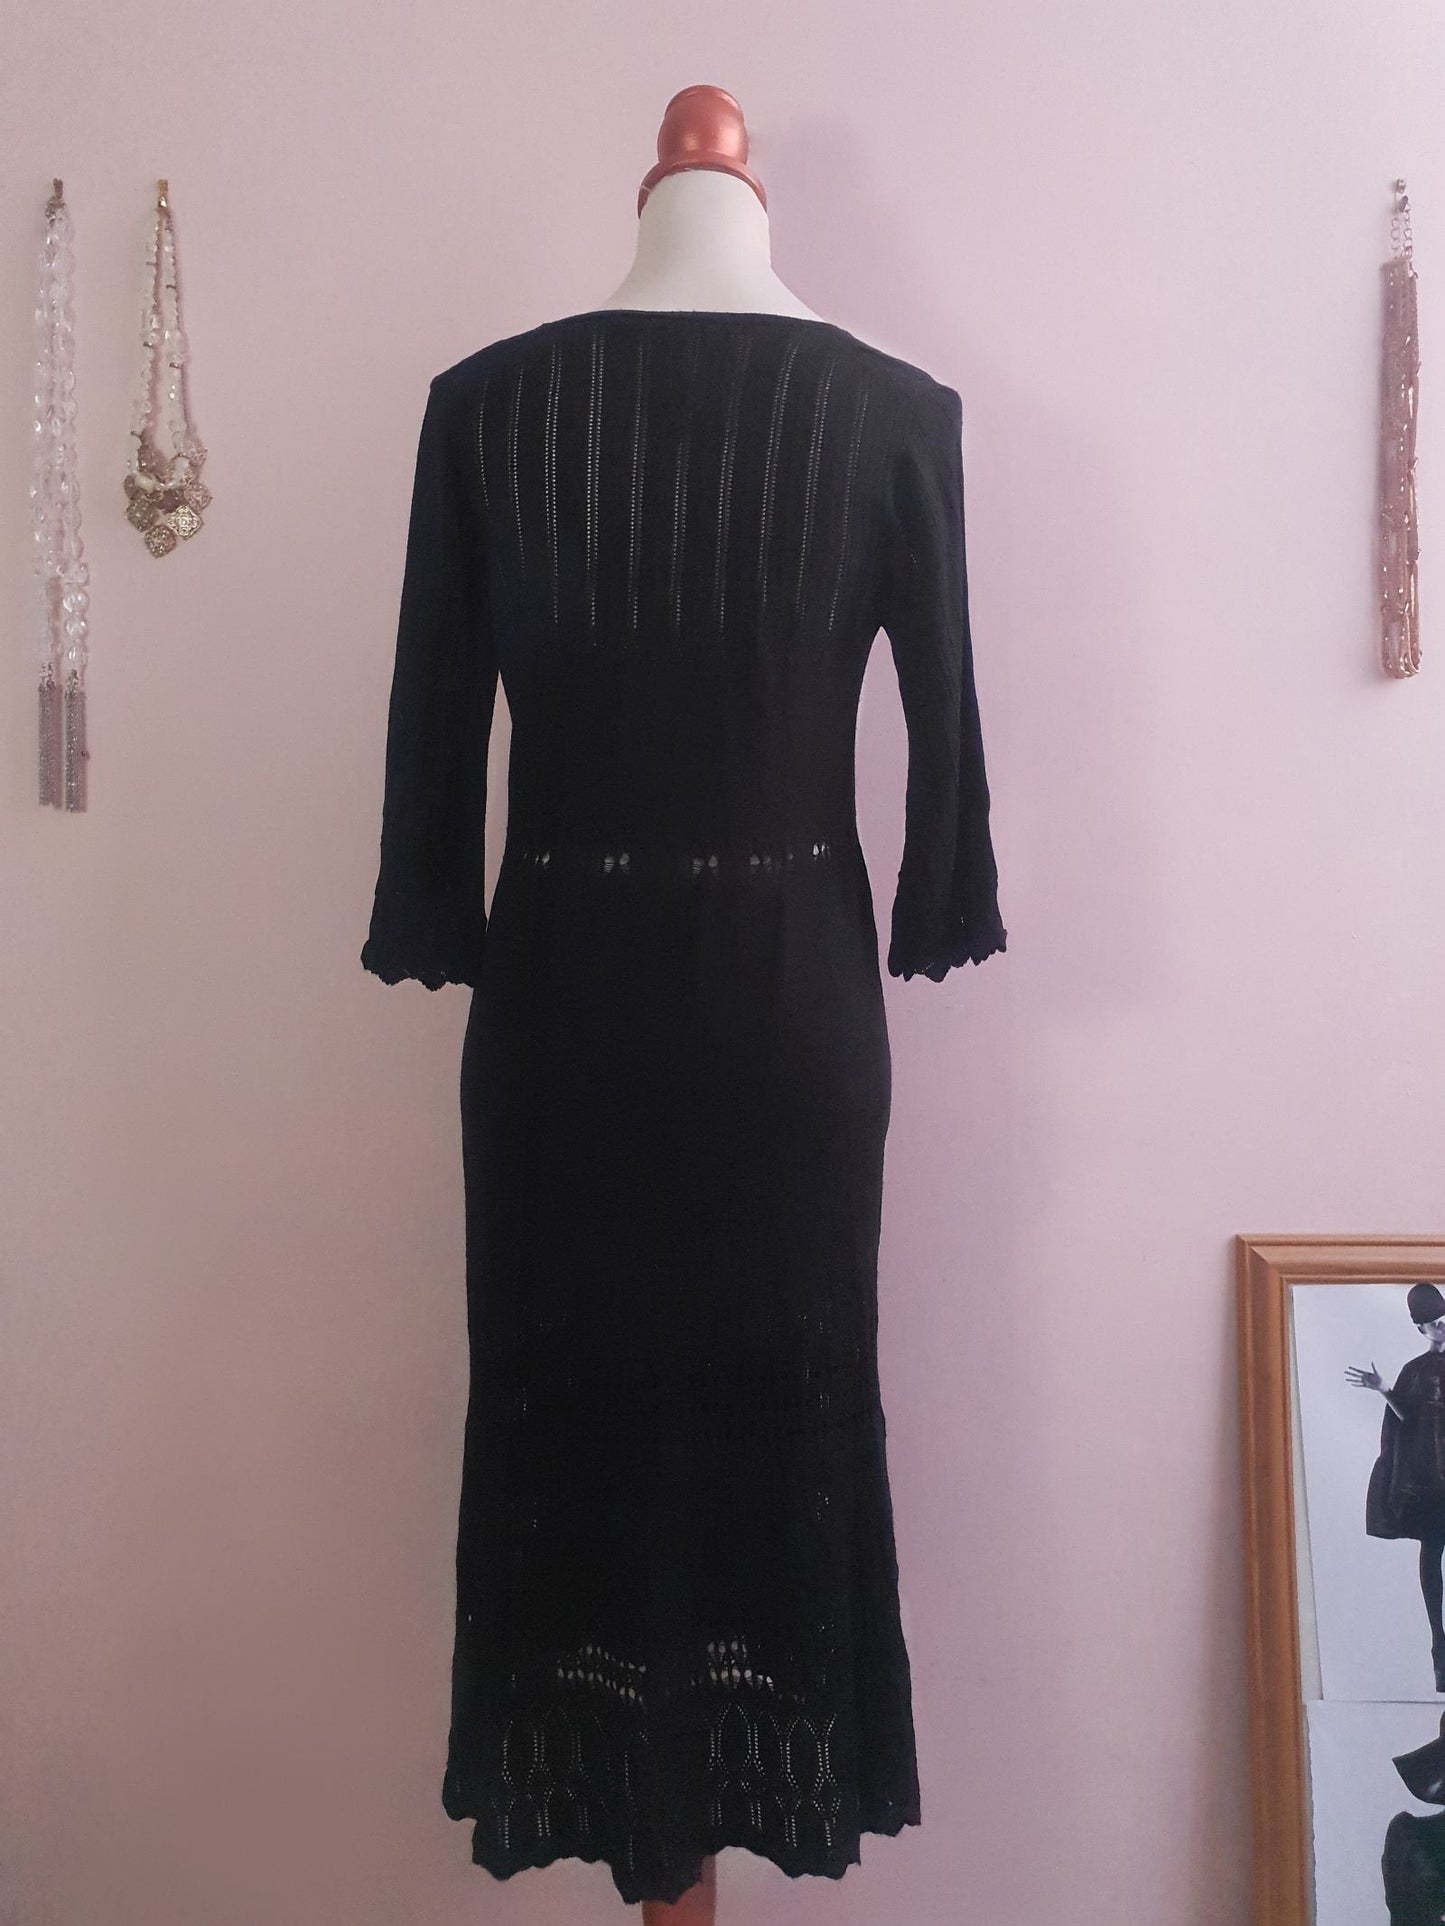 Cute 90s Vintage Black Knit Midi Dress - Size 12